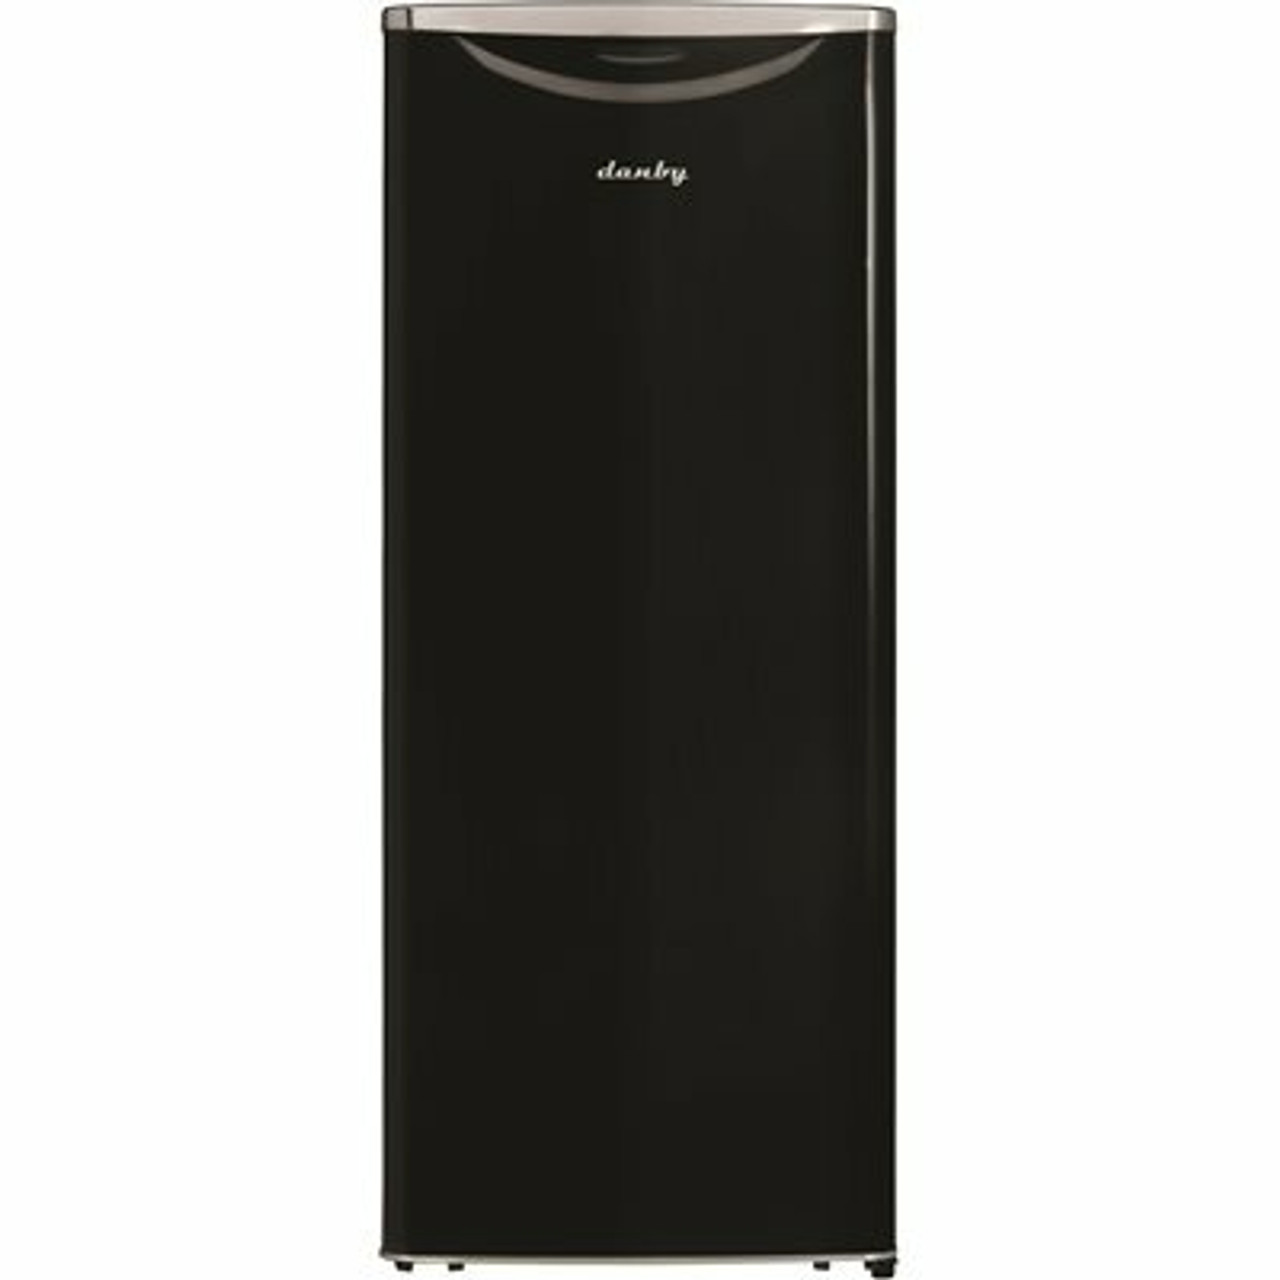 Danby 11 Cu. Ft. Freezerless Refrigerator In Black, Counter Depth